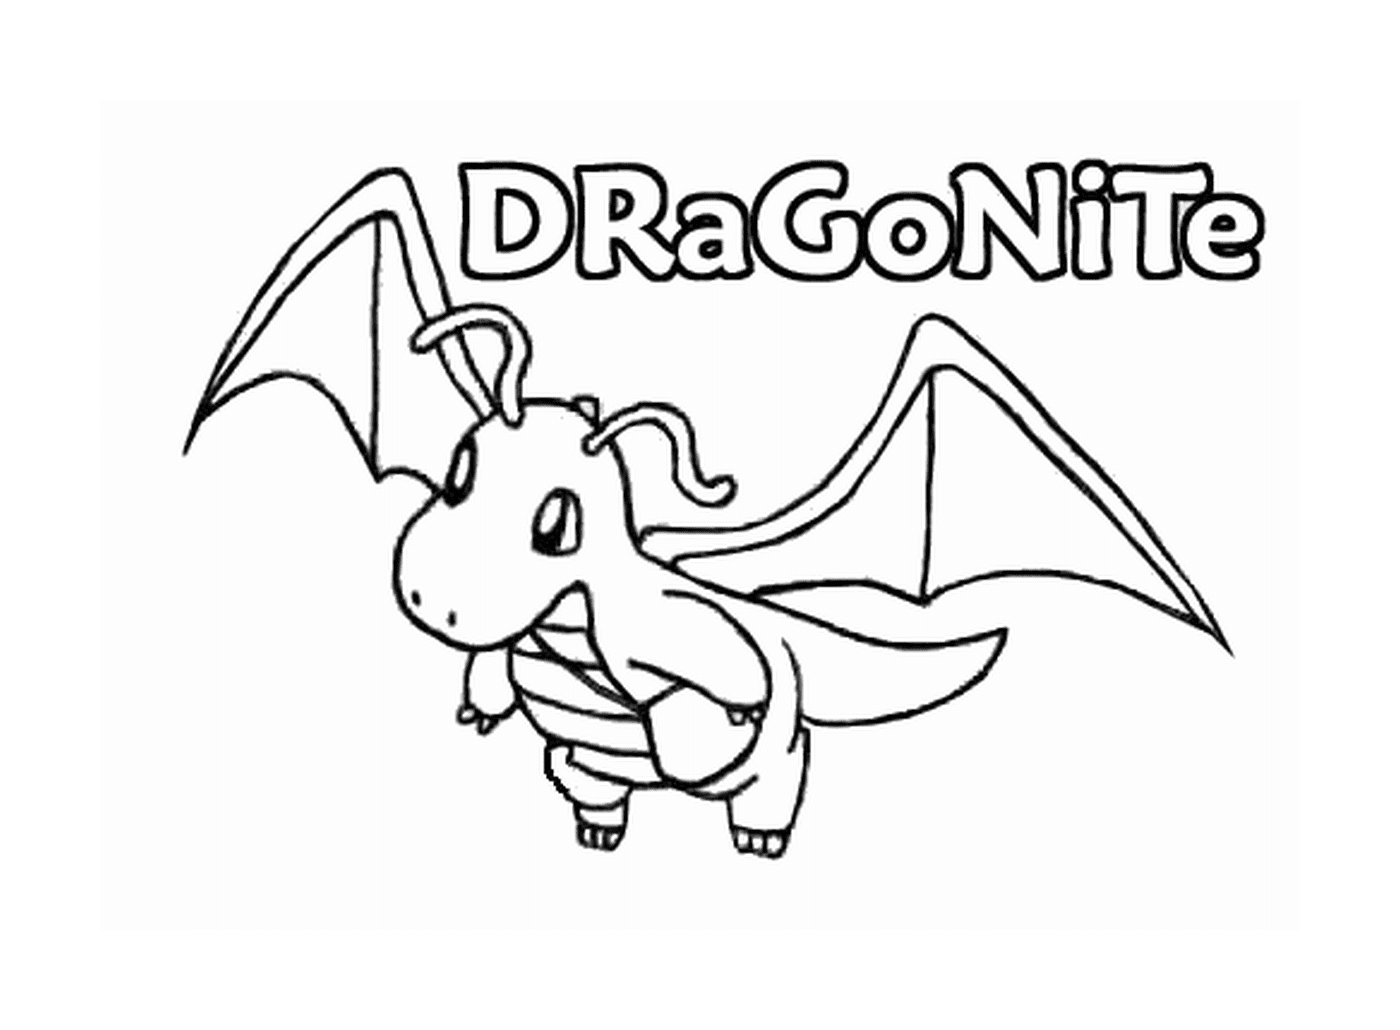   Dragonite : Dragon puissant volant 